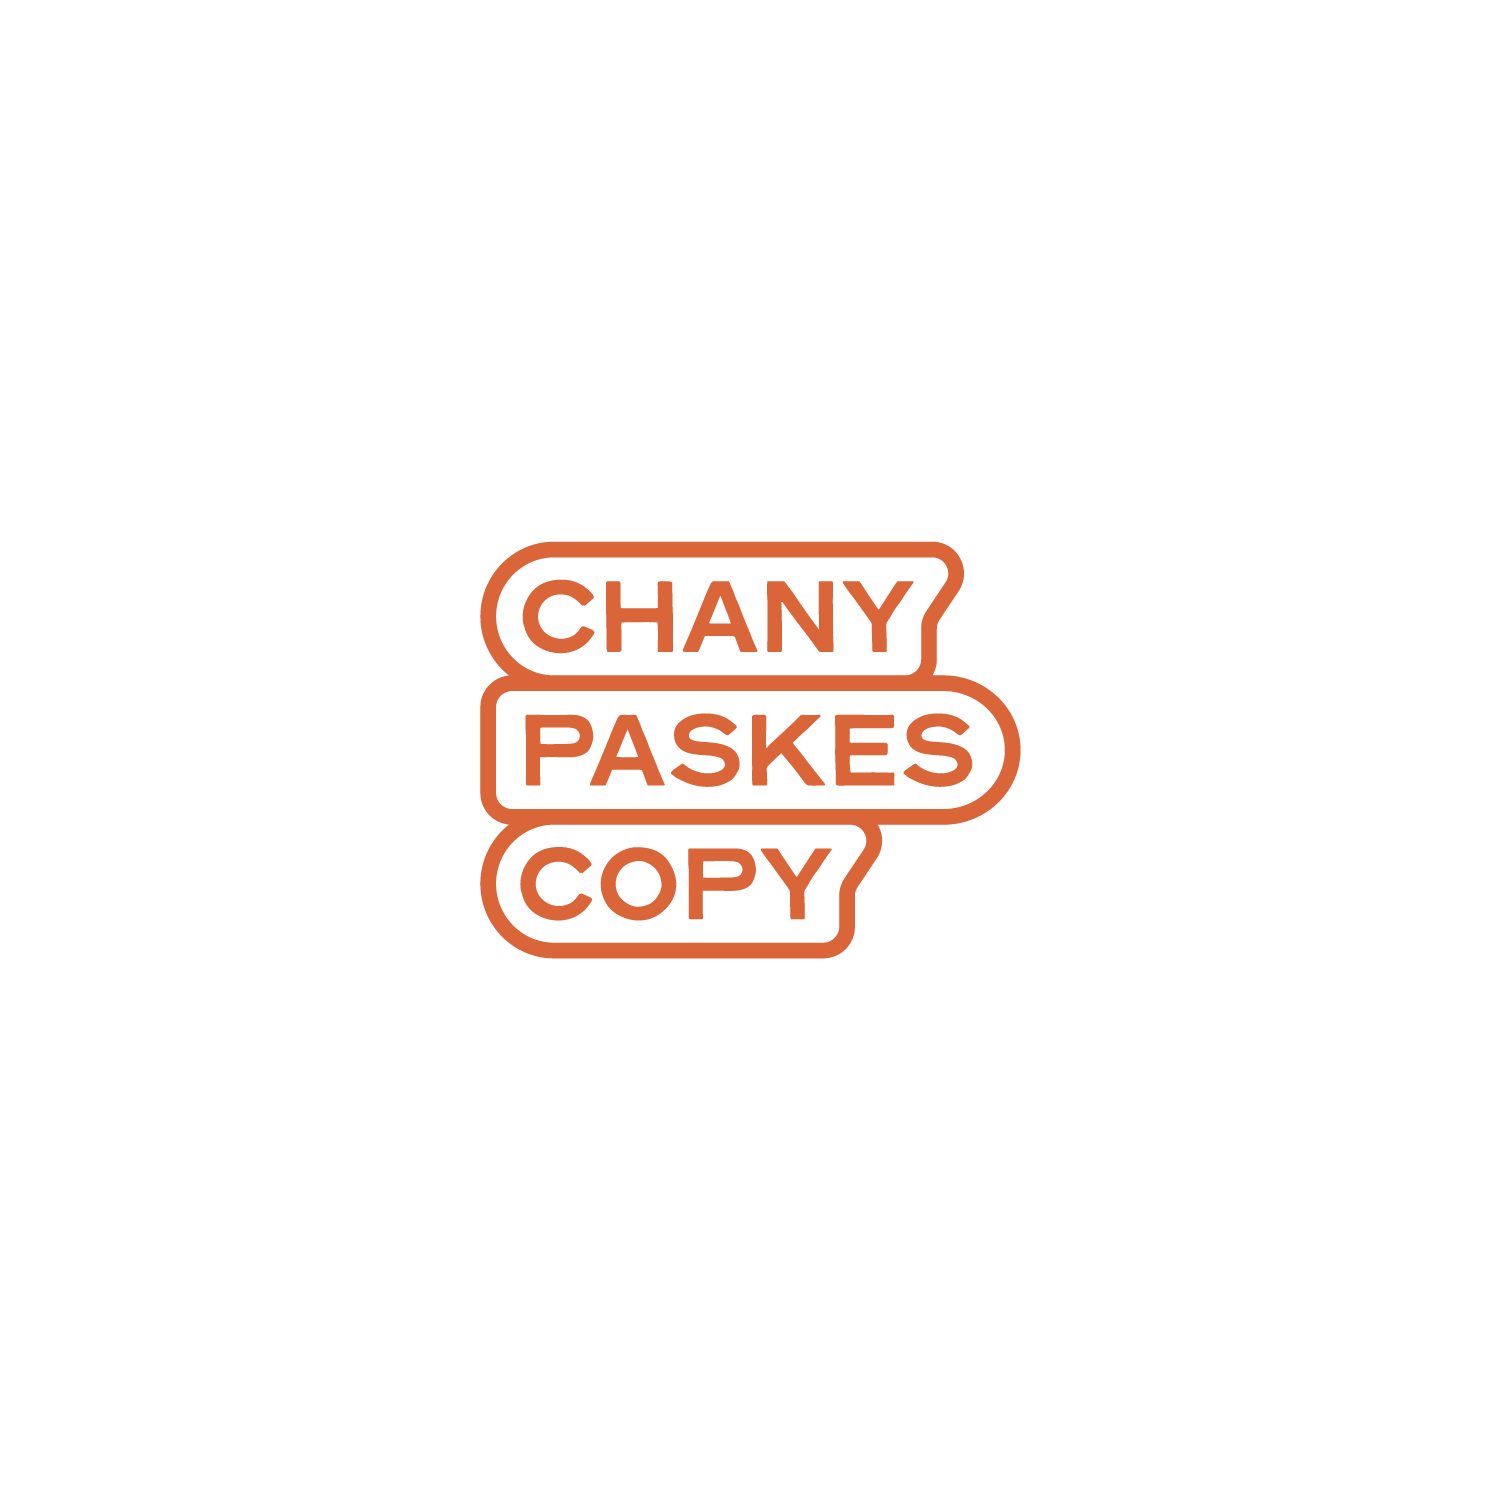 Chany Paskes logo in orange on white background.